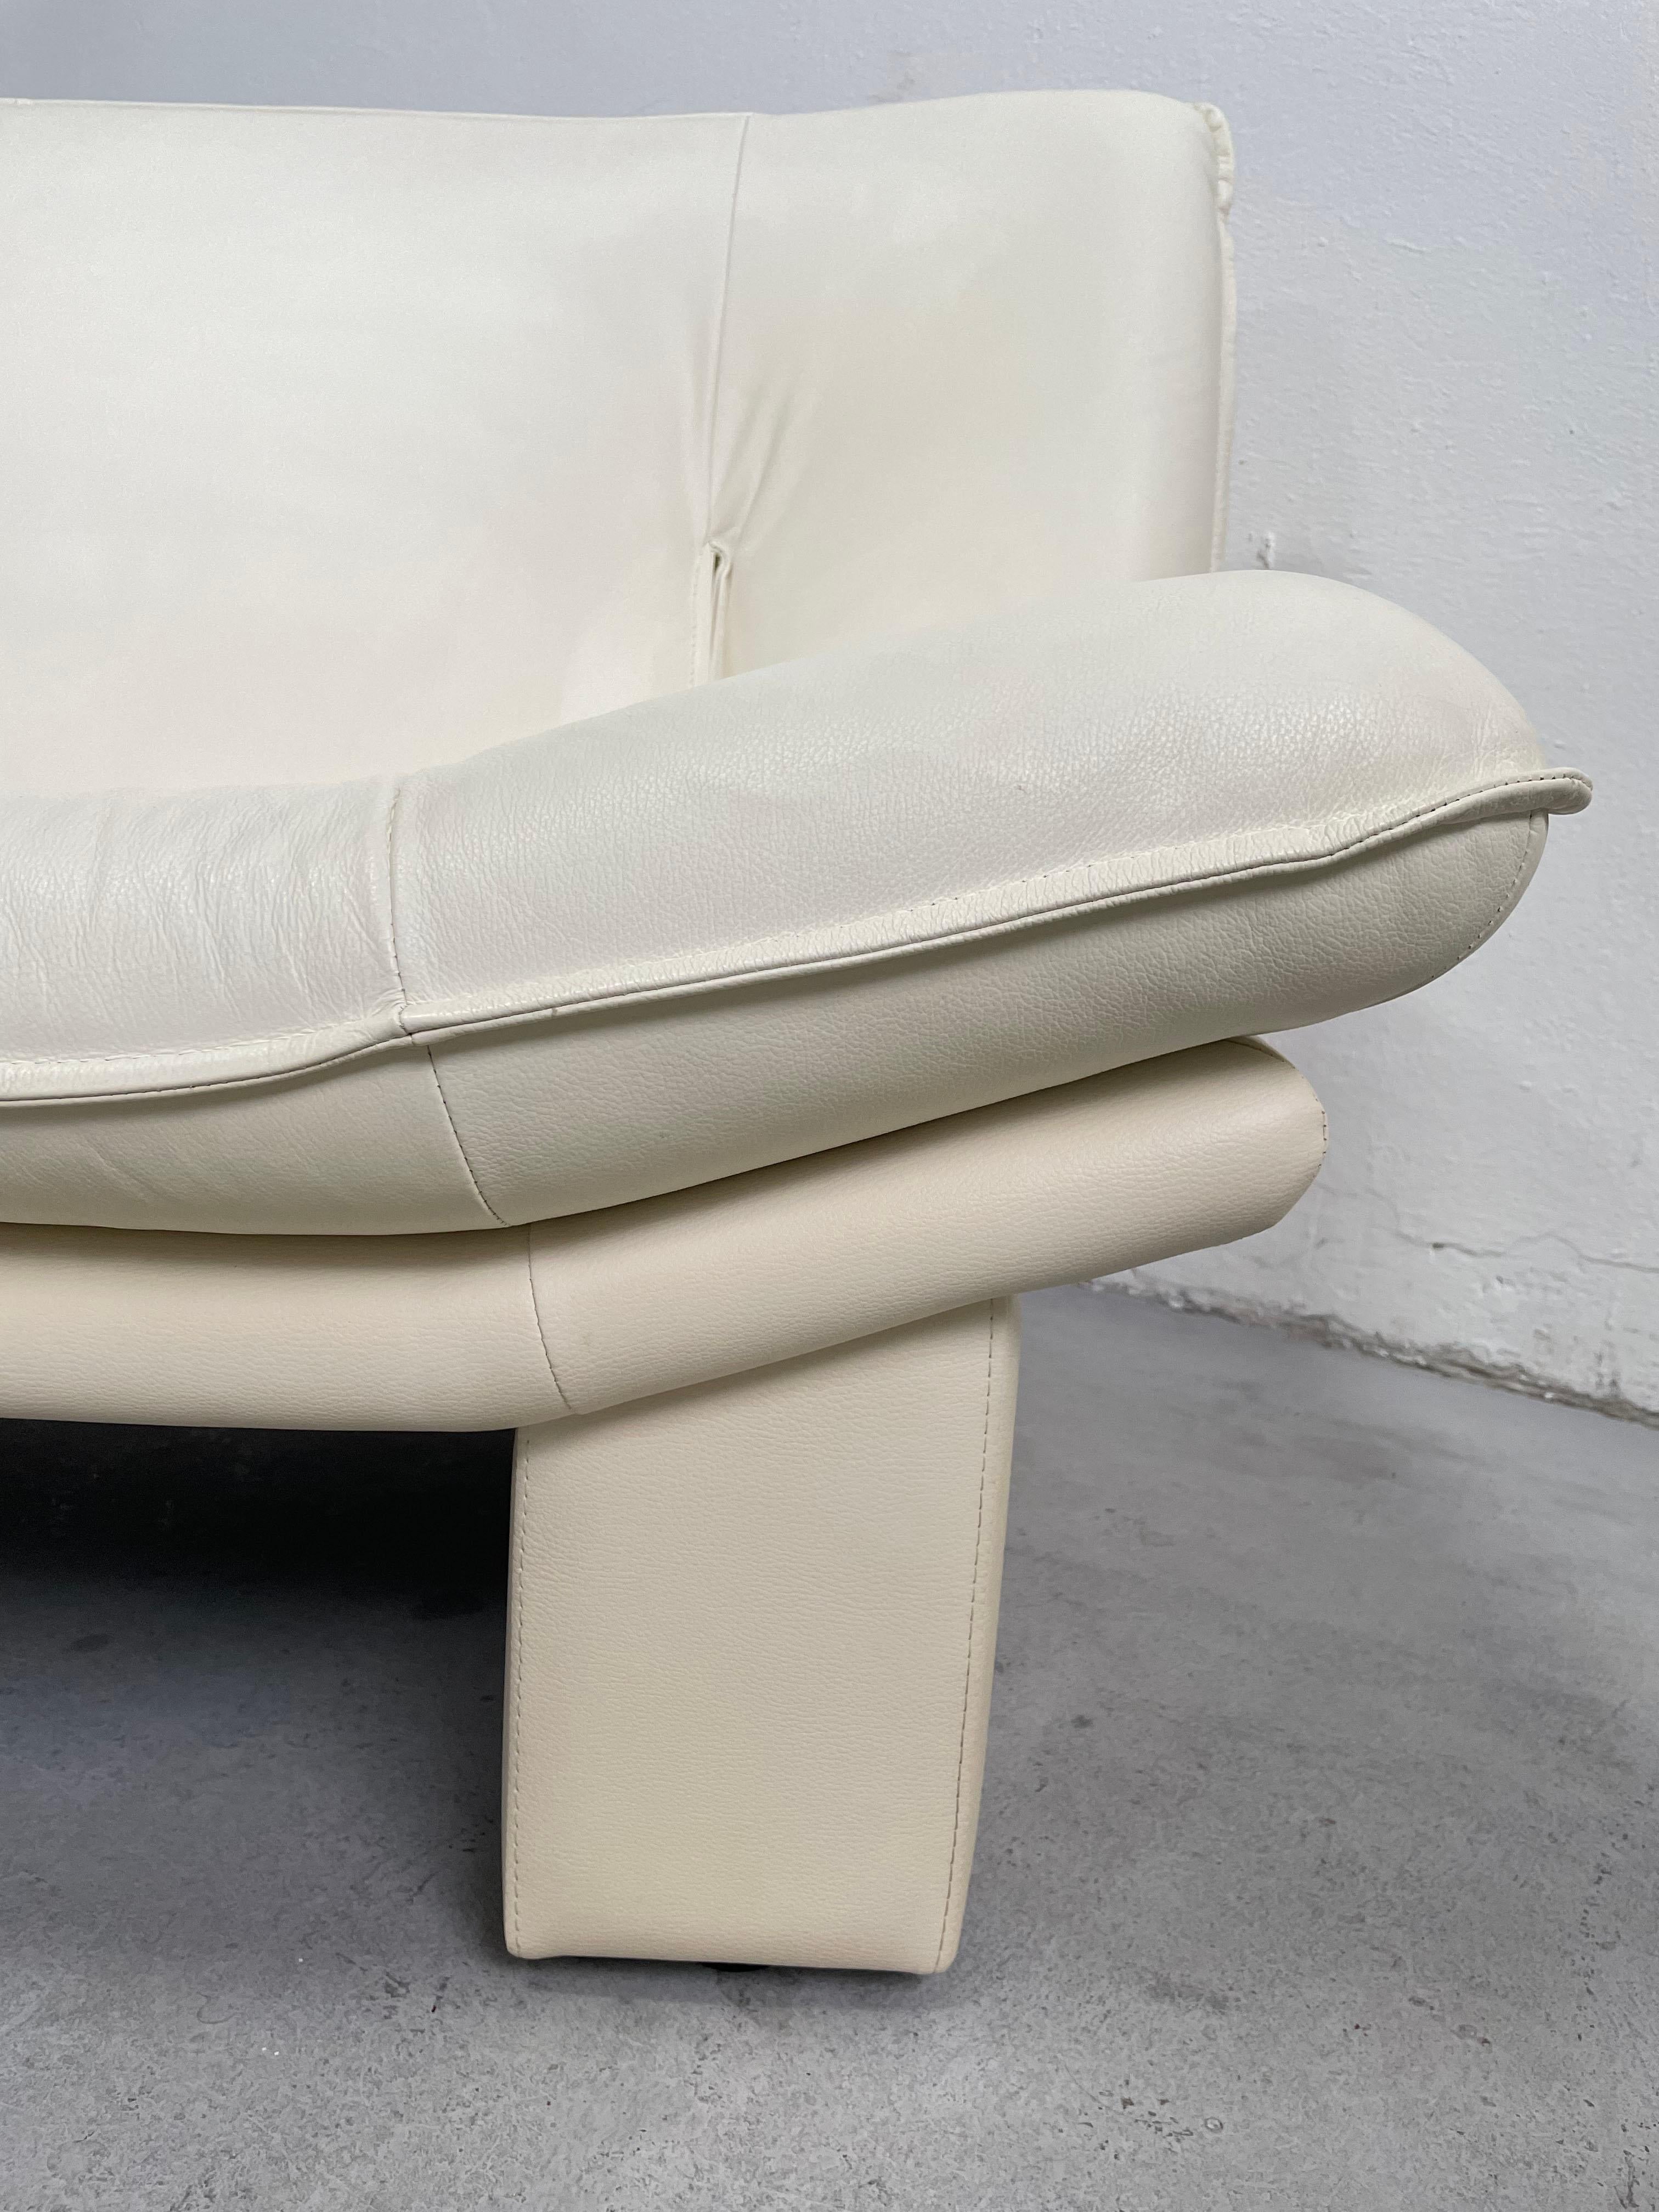 Late 20th Century Nicoletti Salotti Postmodern Italian Ivory White Leather or Leatherete Sofa 1980